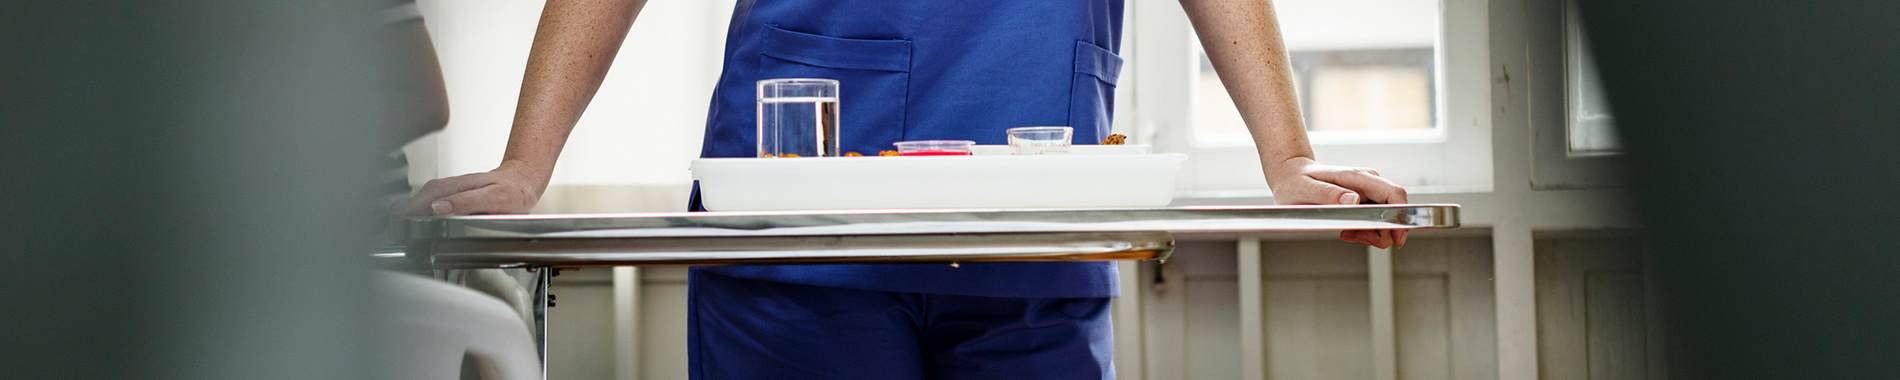 nurse standing behind tray